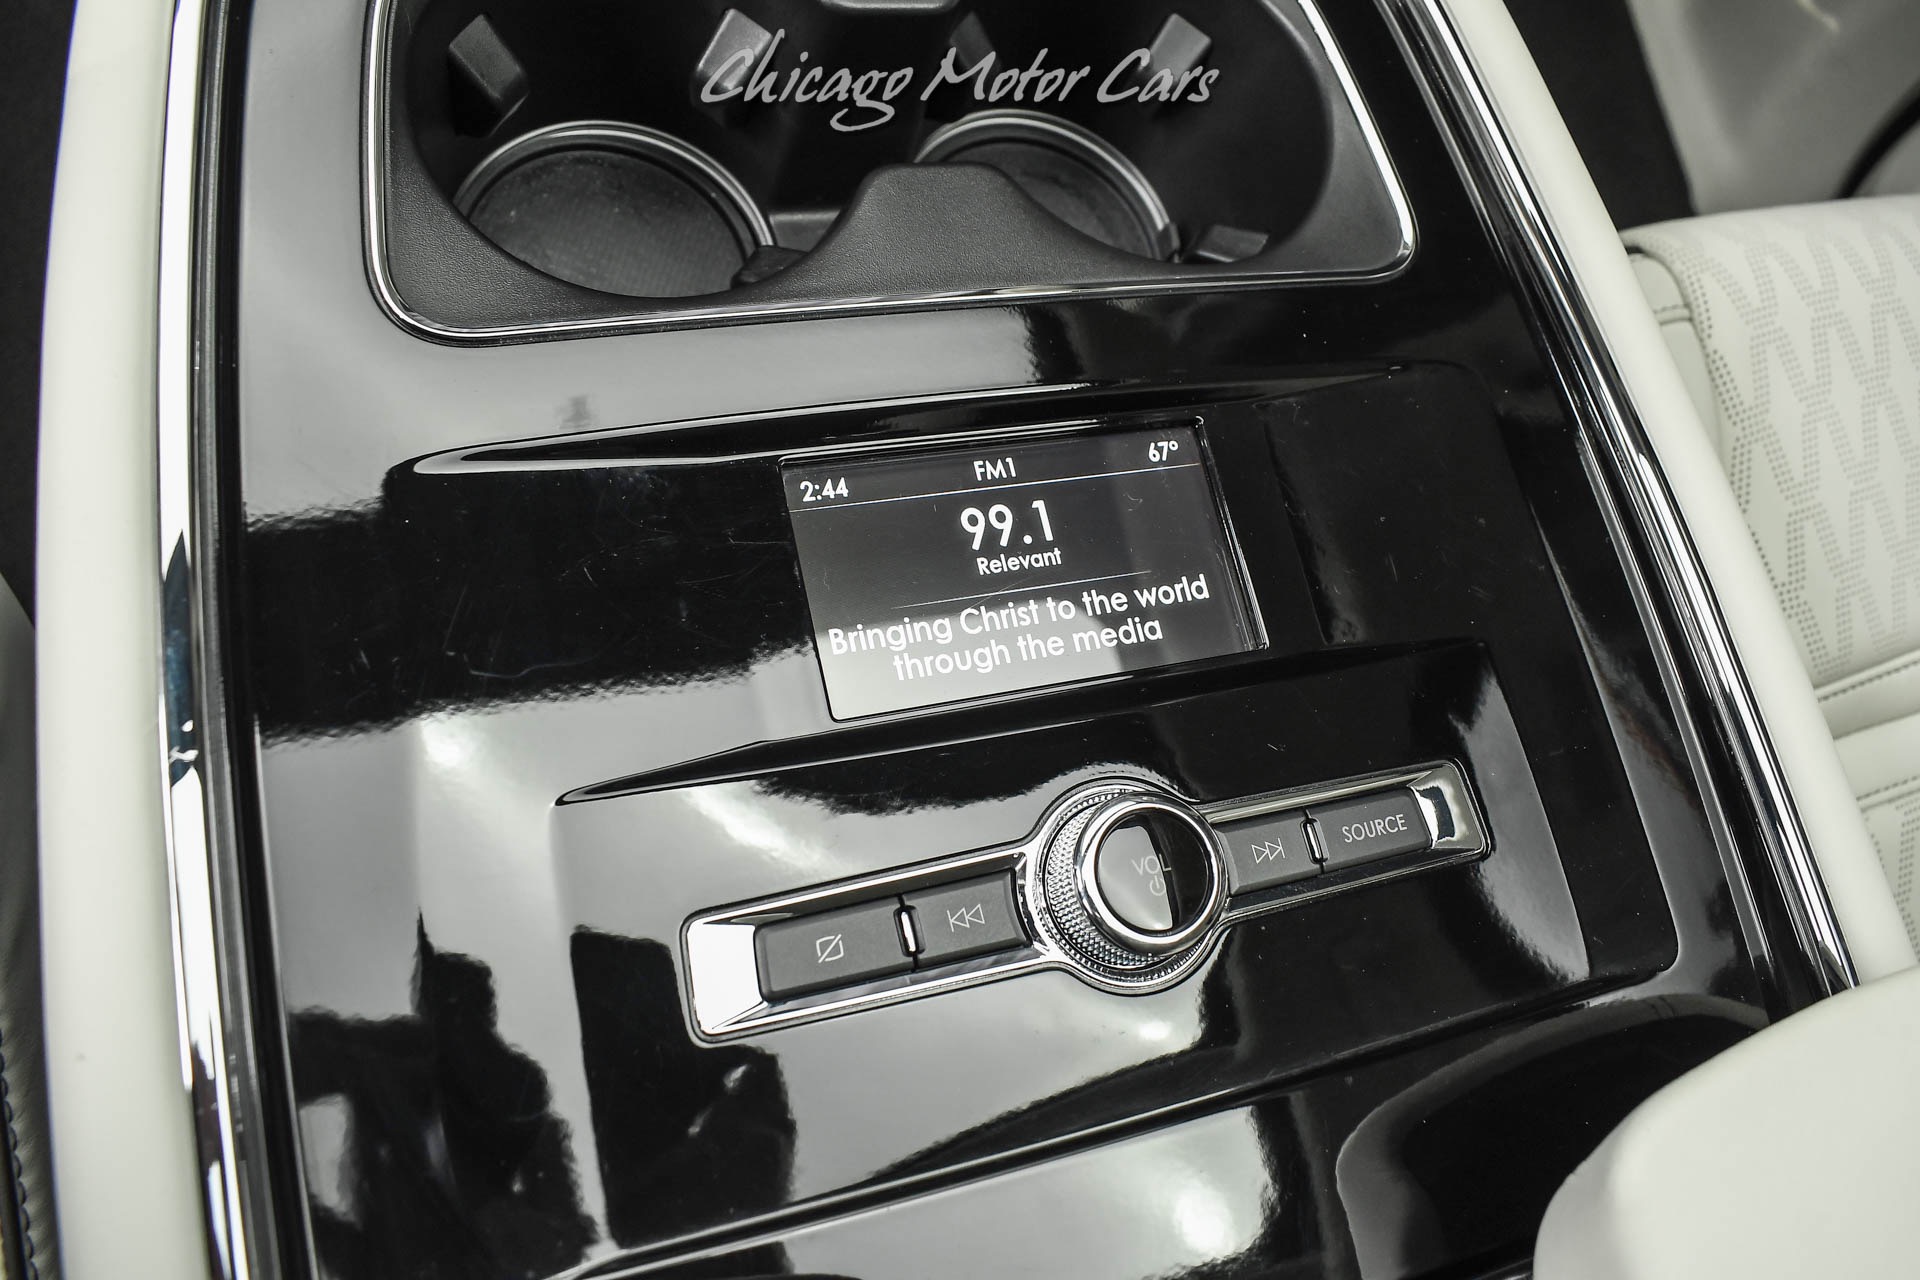 Used-2020-Lincoln-Navigator-Black-Label-SUV-HIGHEST-trim-Level-Massage-Front-Seats-3-Row-FULL-SIZE